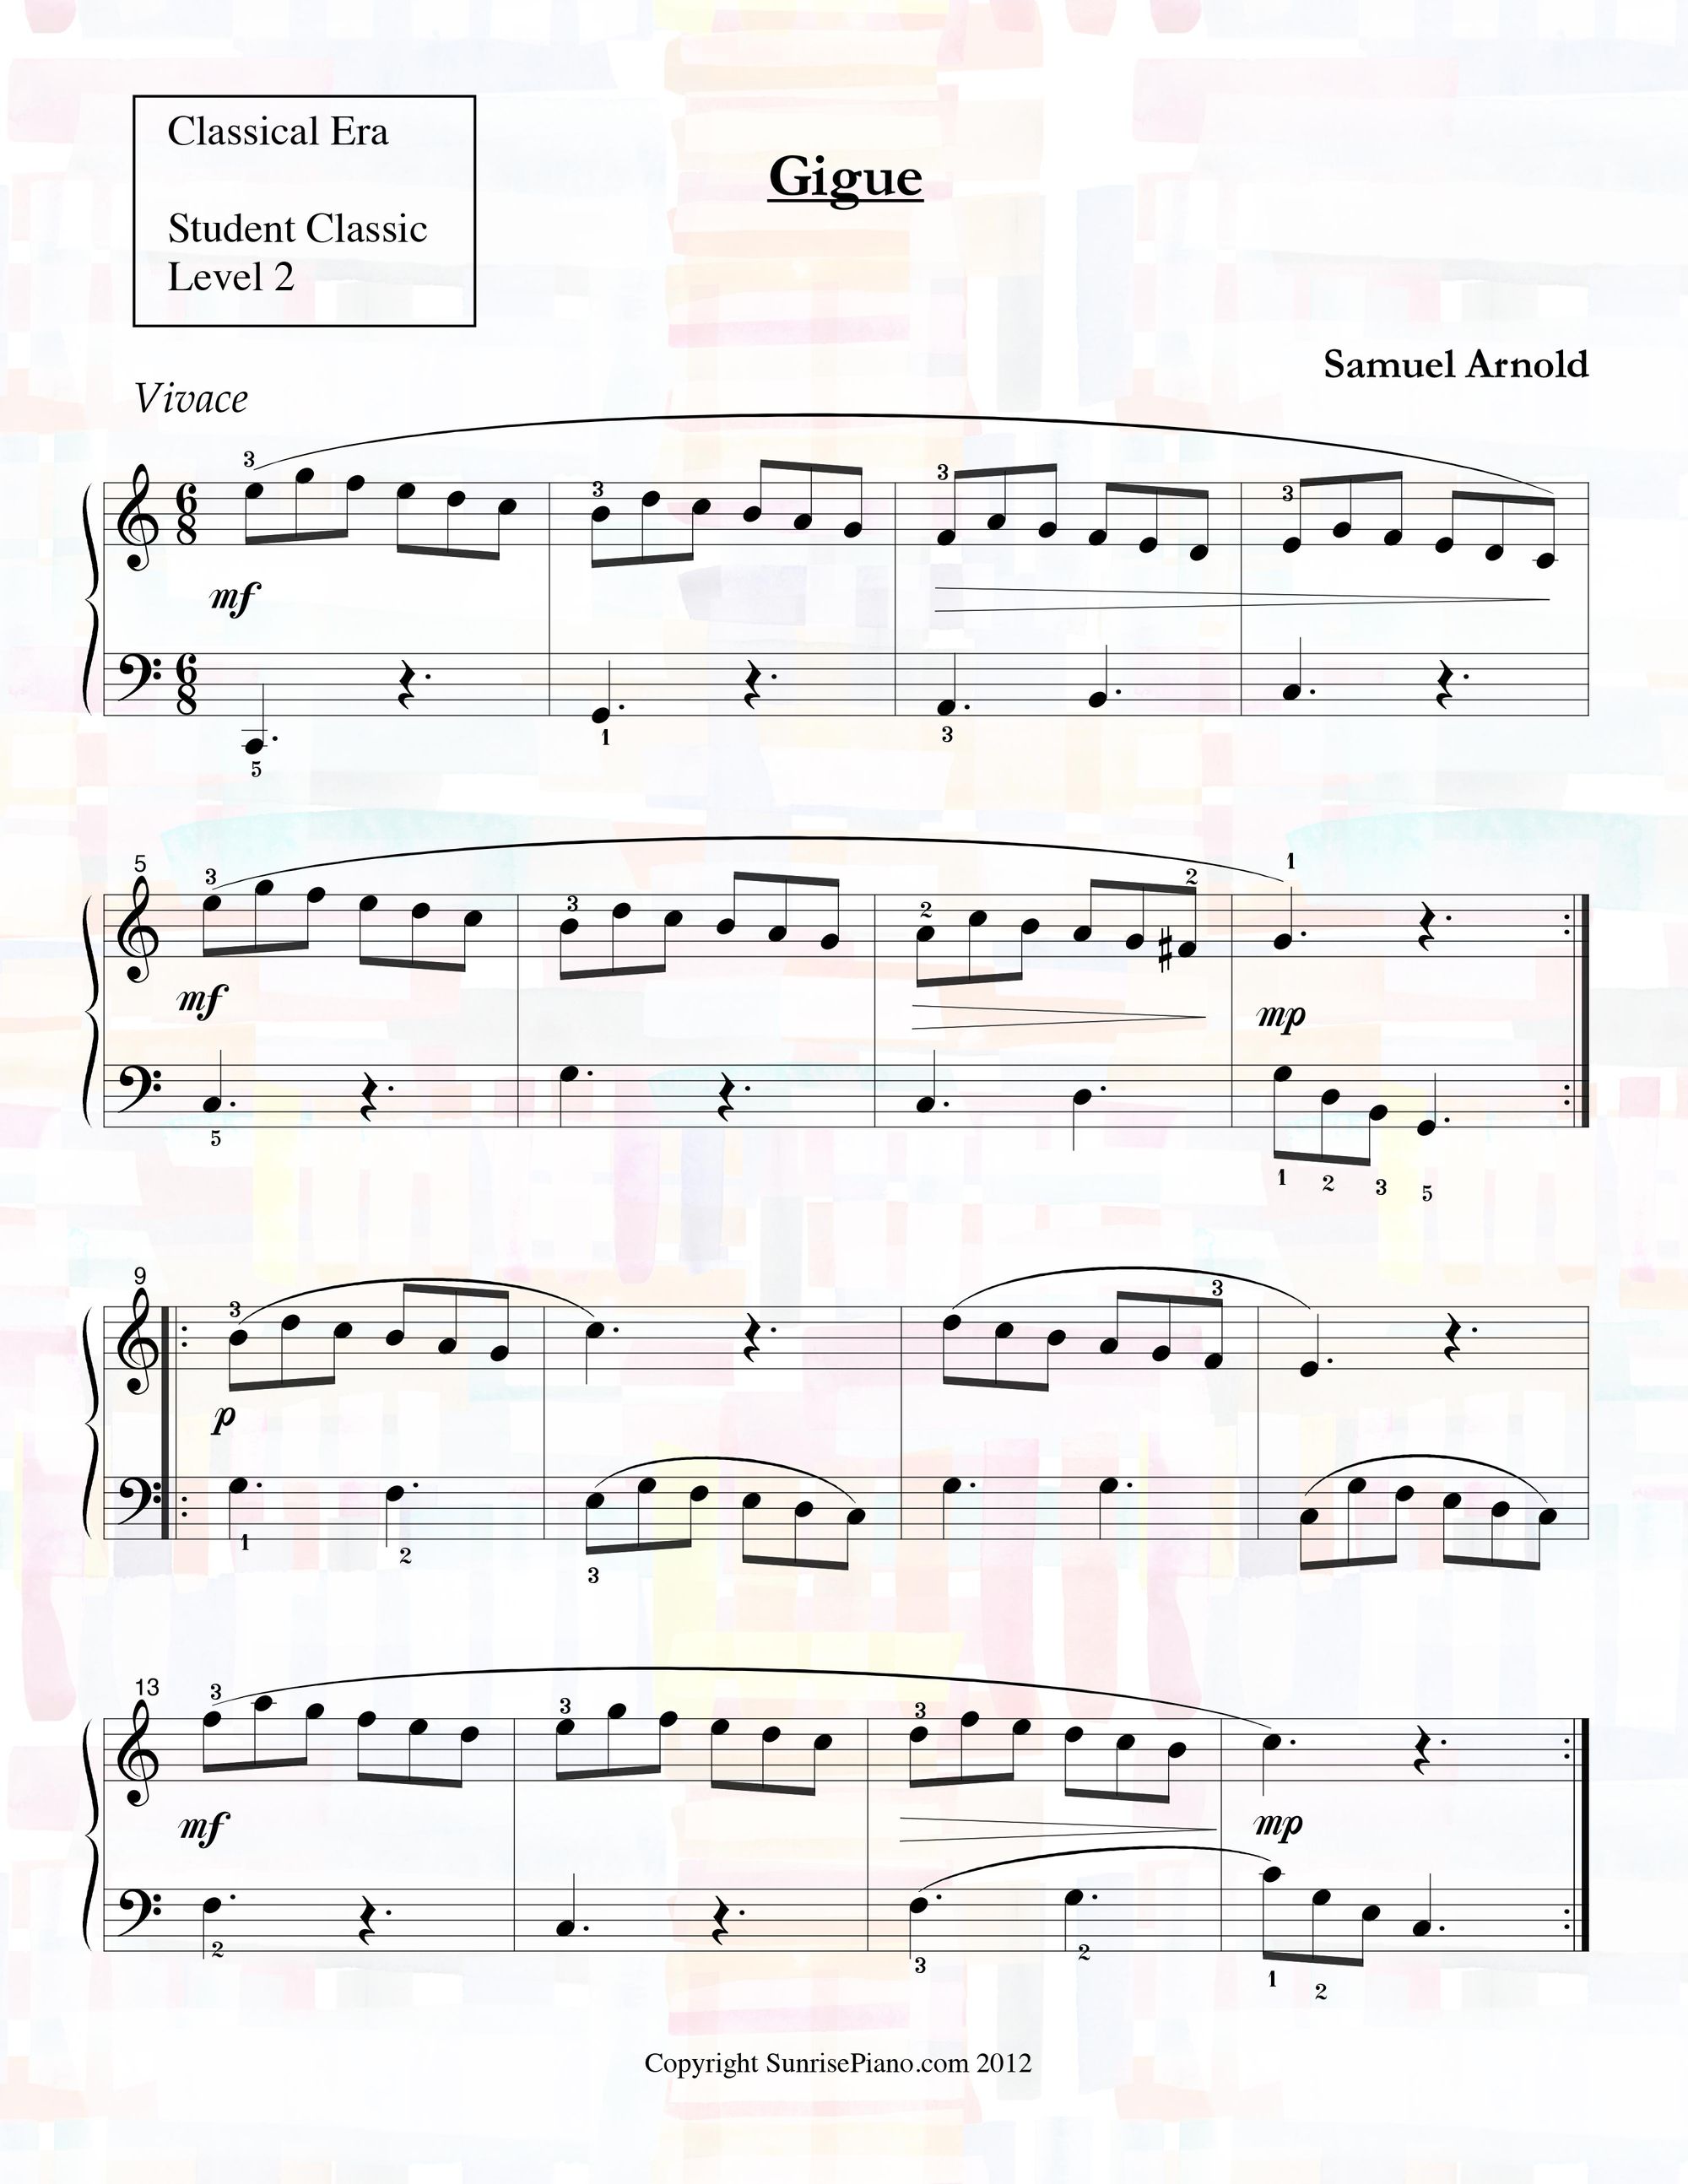 Samuel Arnold - Gigue - Piano Sheet Music